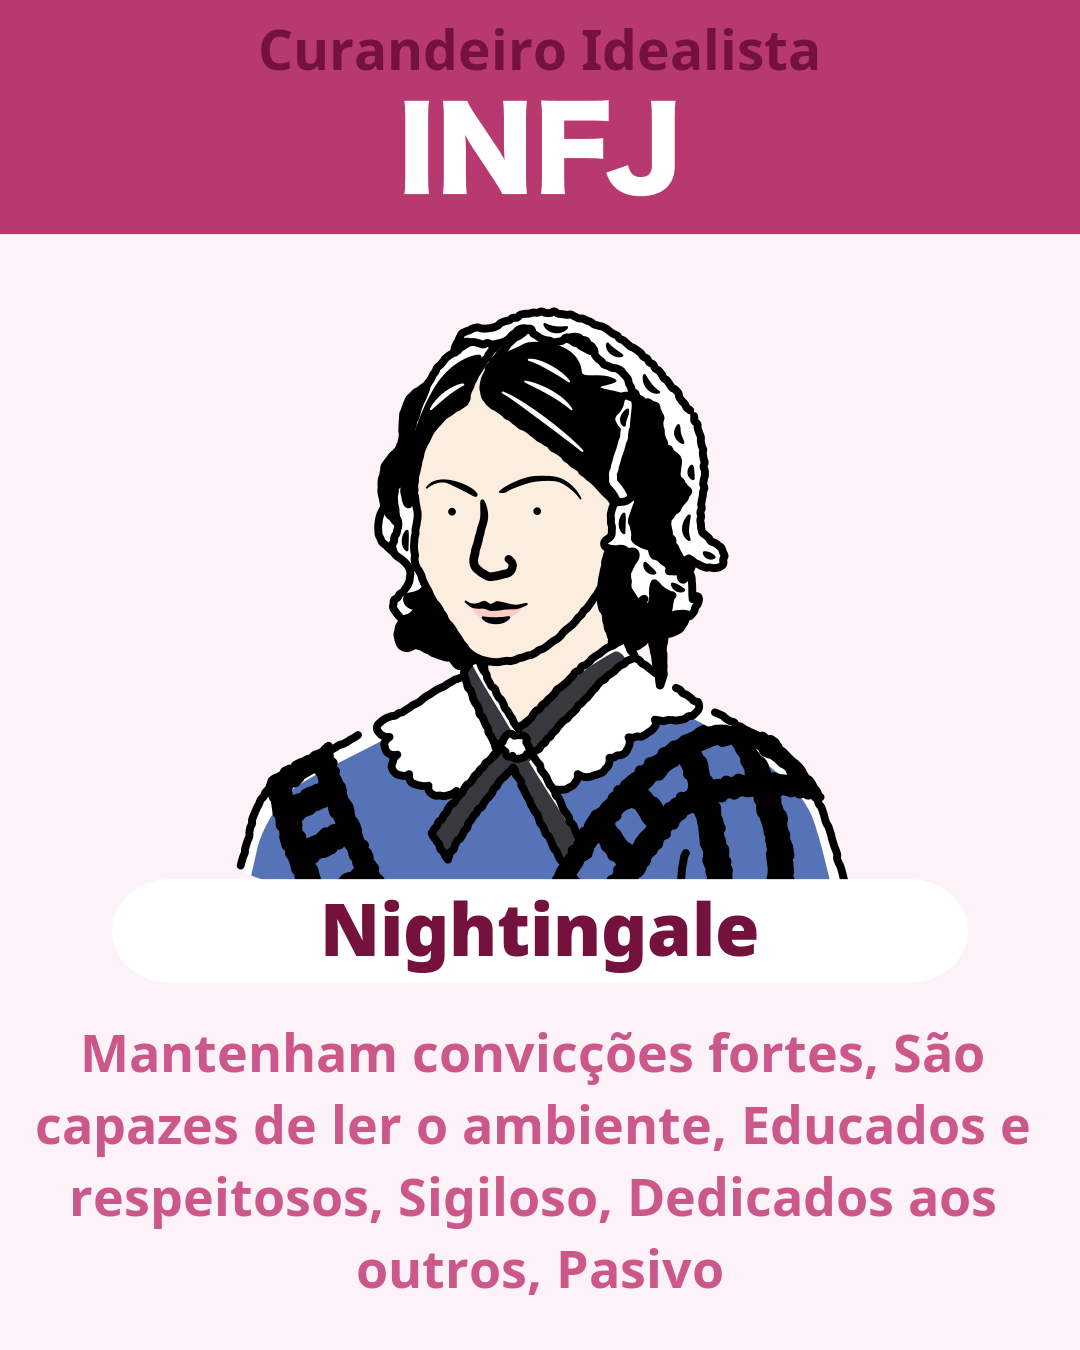 Nightingale - INFJ